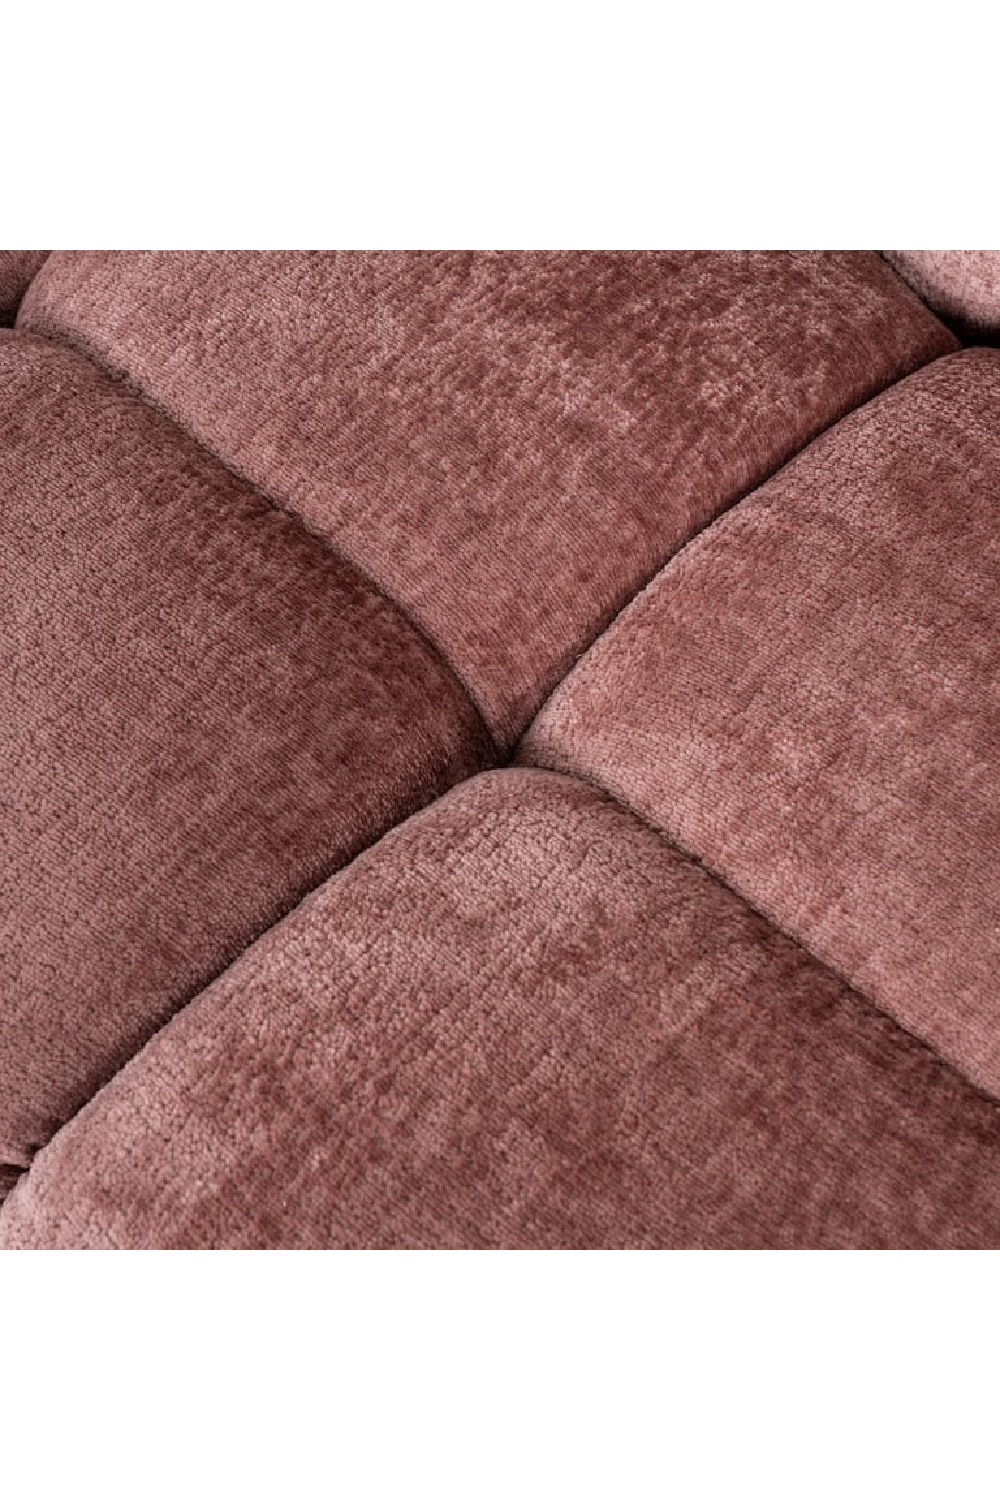 Chenille Chanelled Sofa | OROA Charelle | Oroa.com